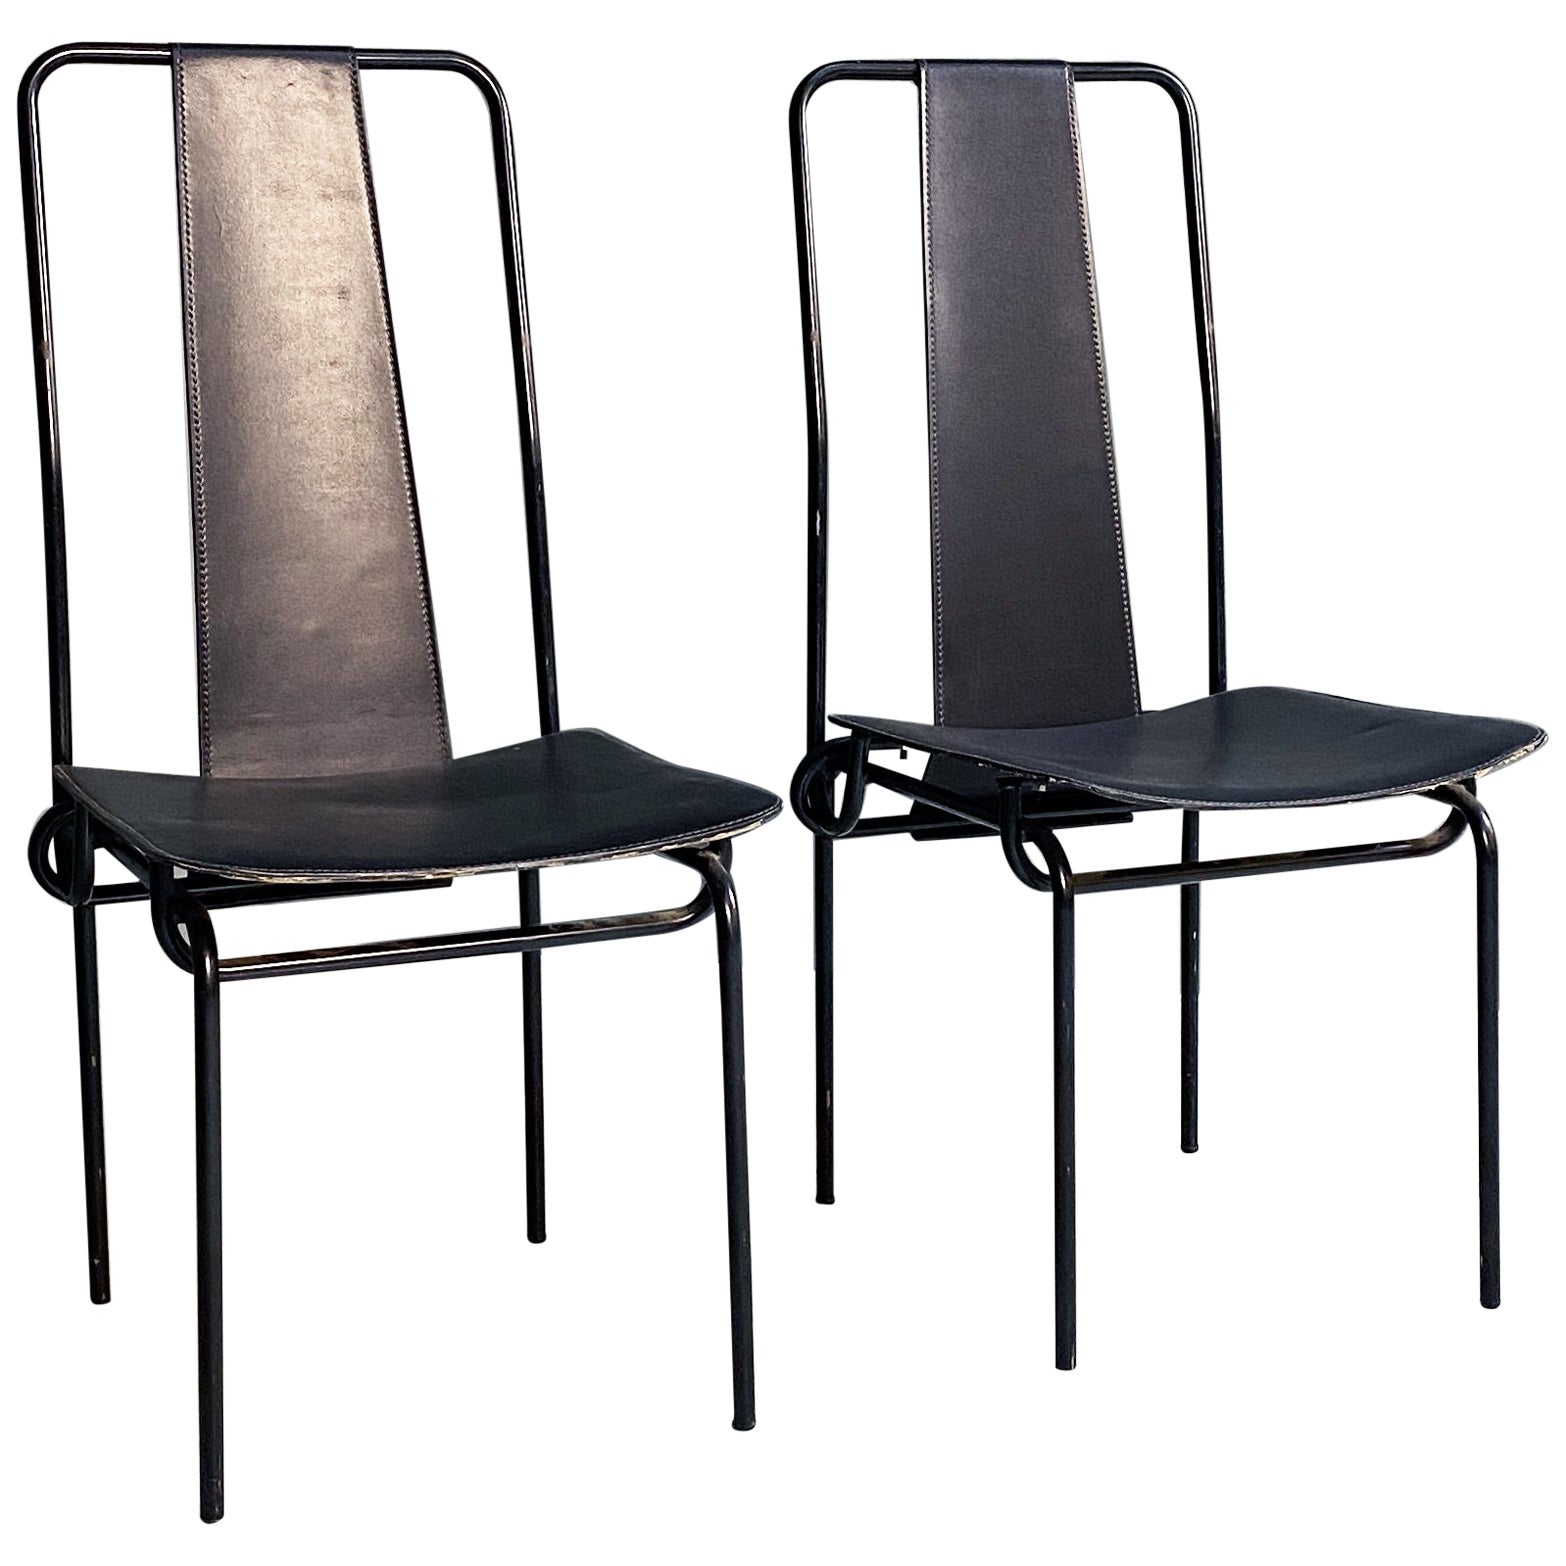 Italian modern Black chairs by Adalberto del Lago for Misura Emme, 1980s For Sale